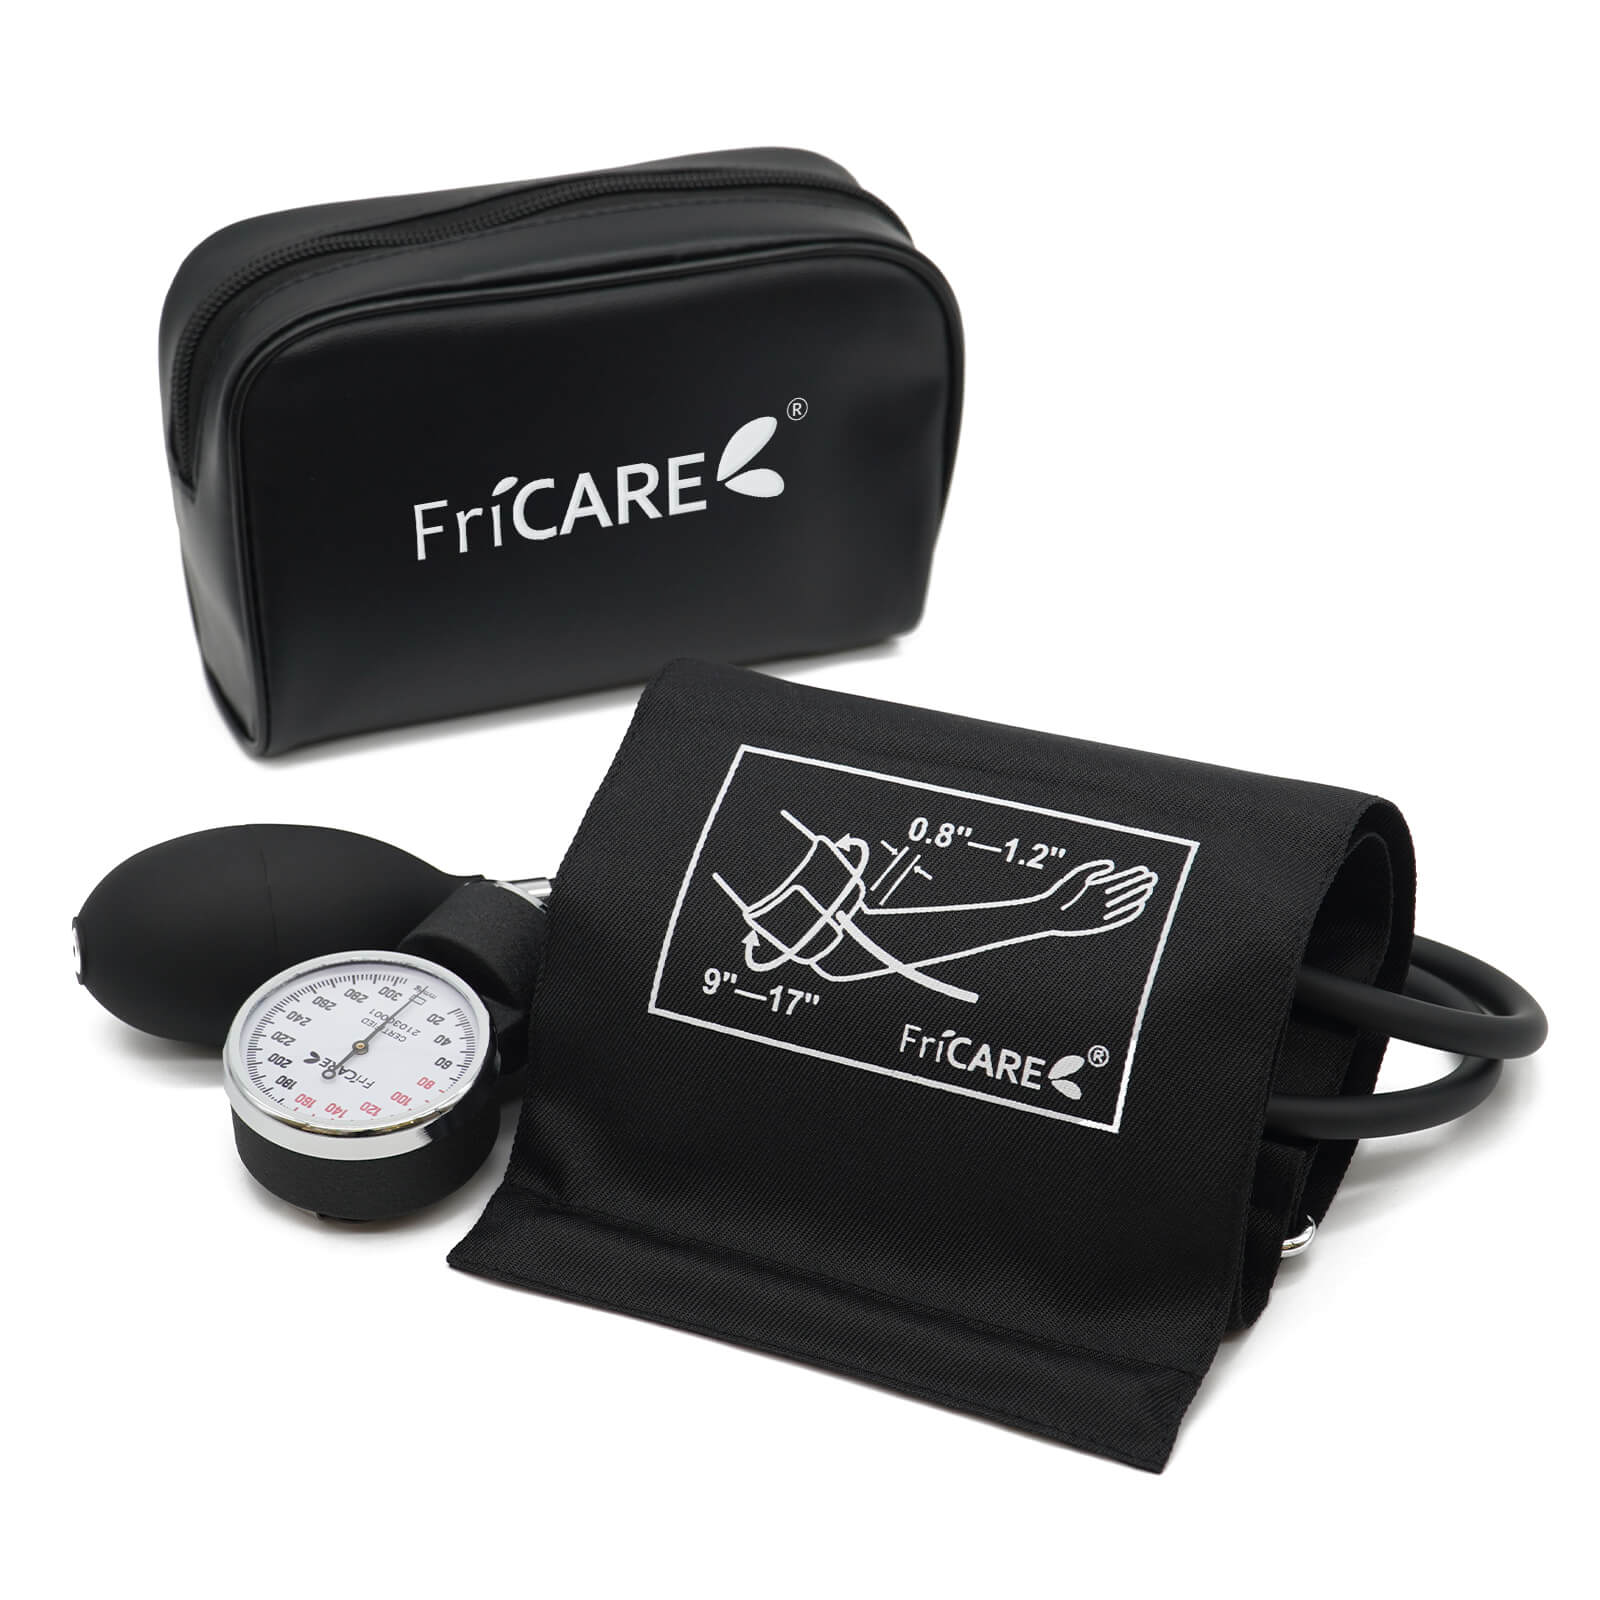 Clairre Professional Sphygmomanometer Manual Blood Pressure Cuff and  Stethoscope